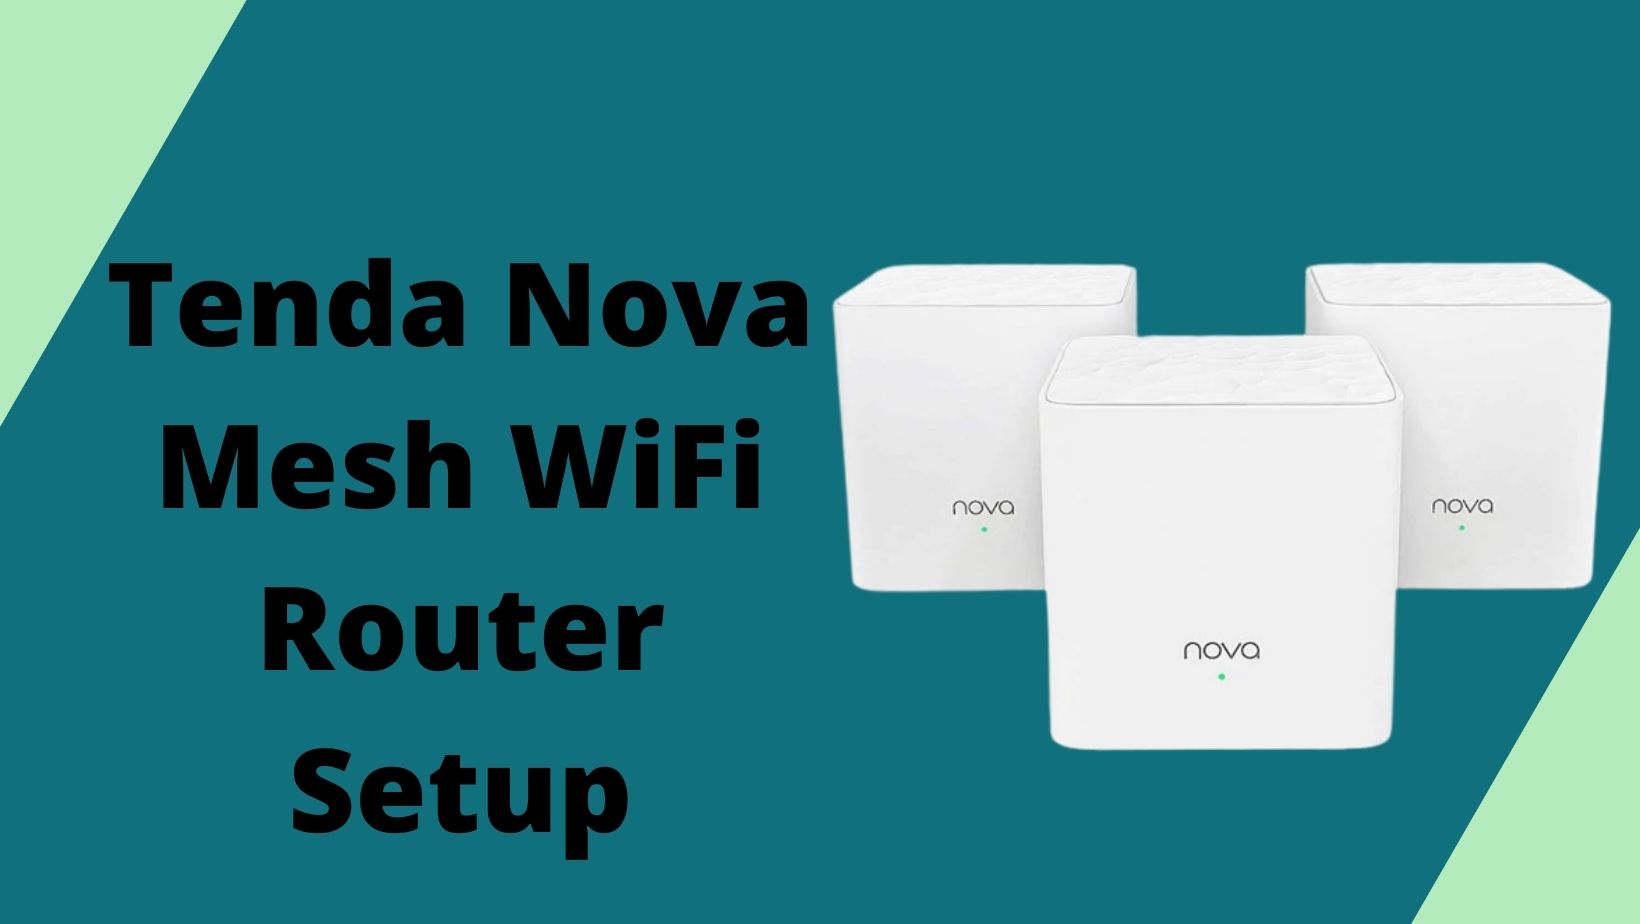 Tenda Nova Mesh WiFi Router Setup